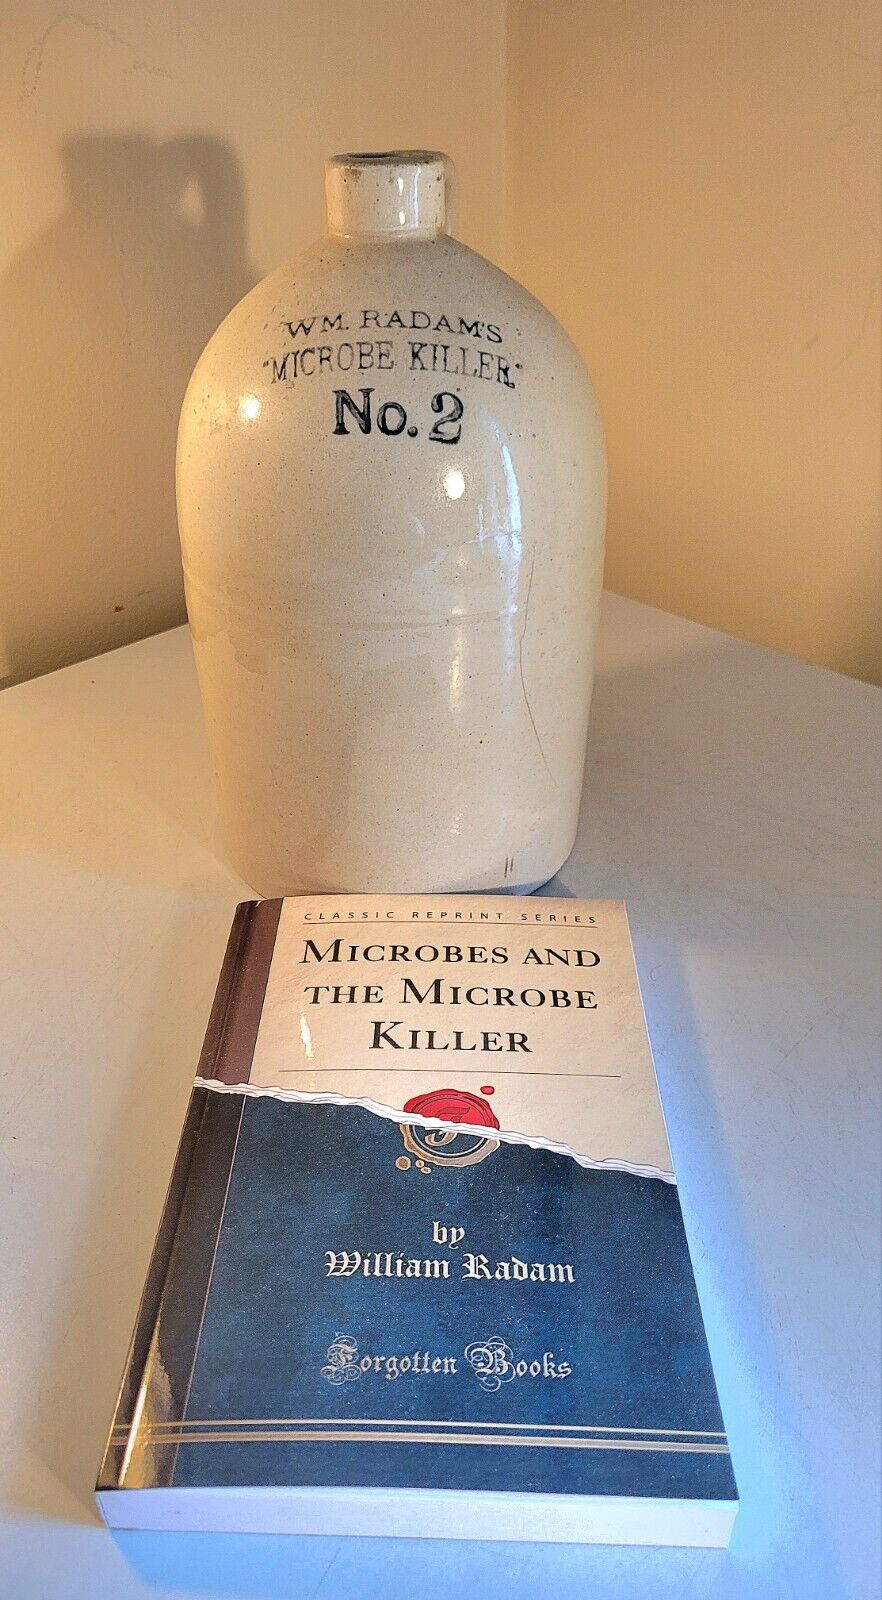 Wm RADAM'S MICROBE KILLER NO.2 STONEWARE GALLON JUG 1890s